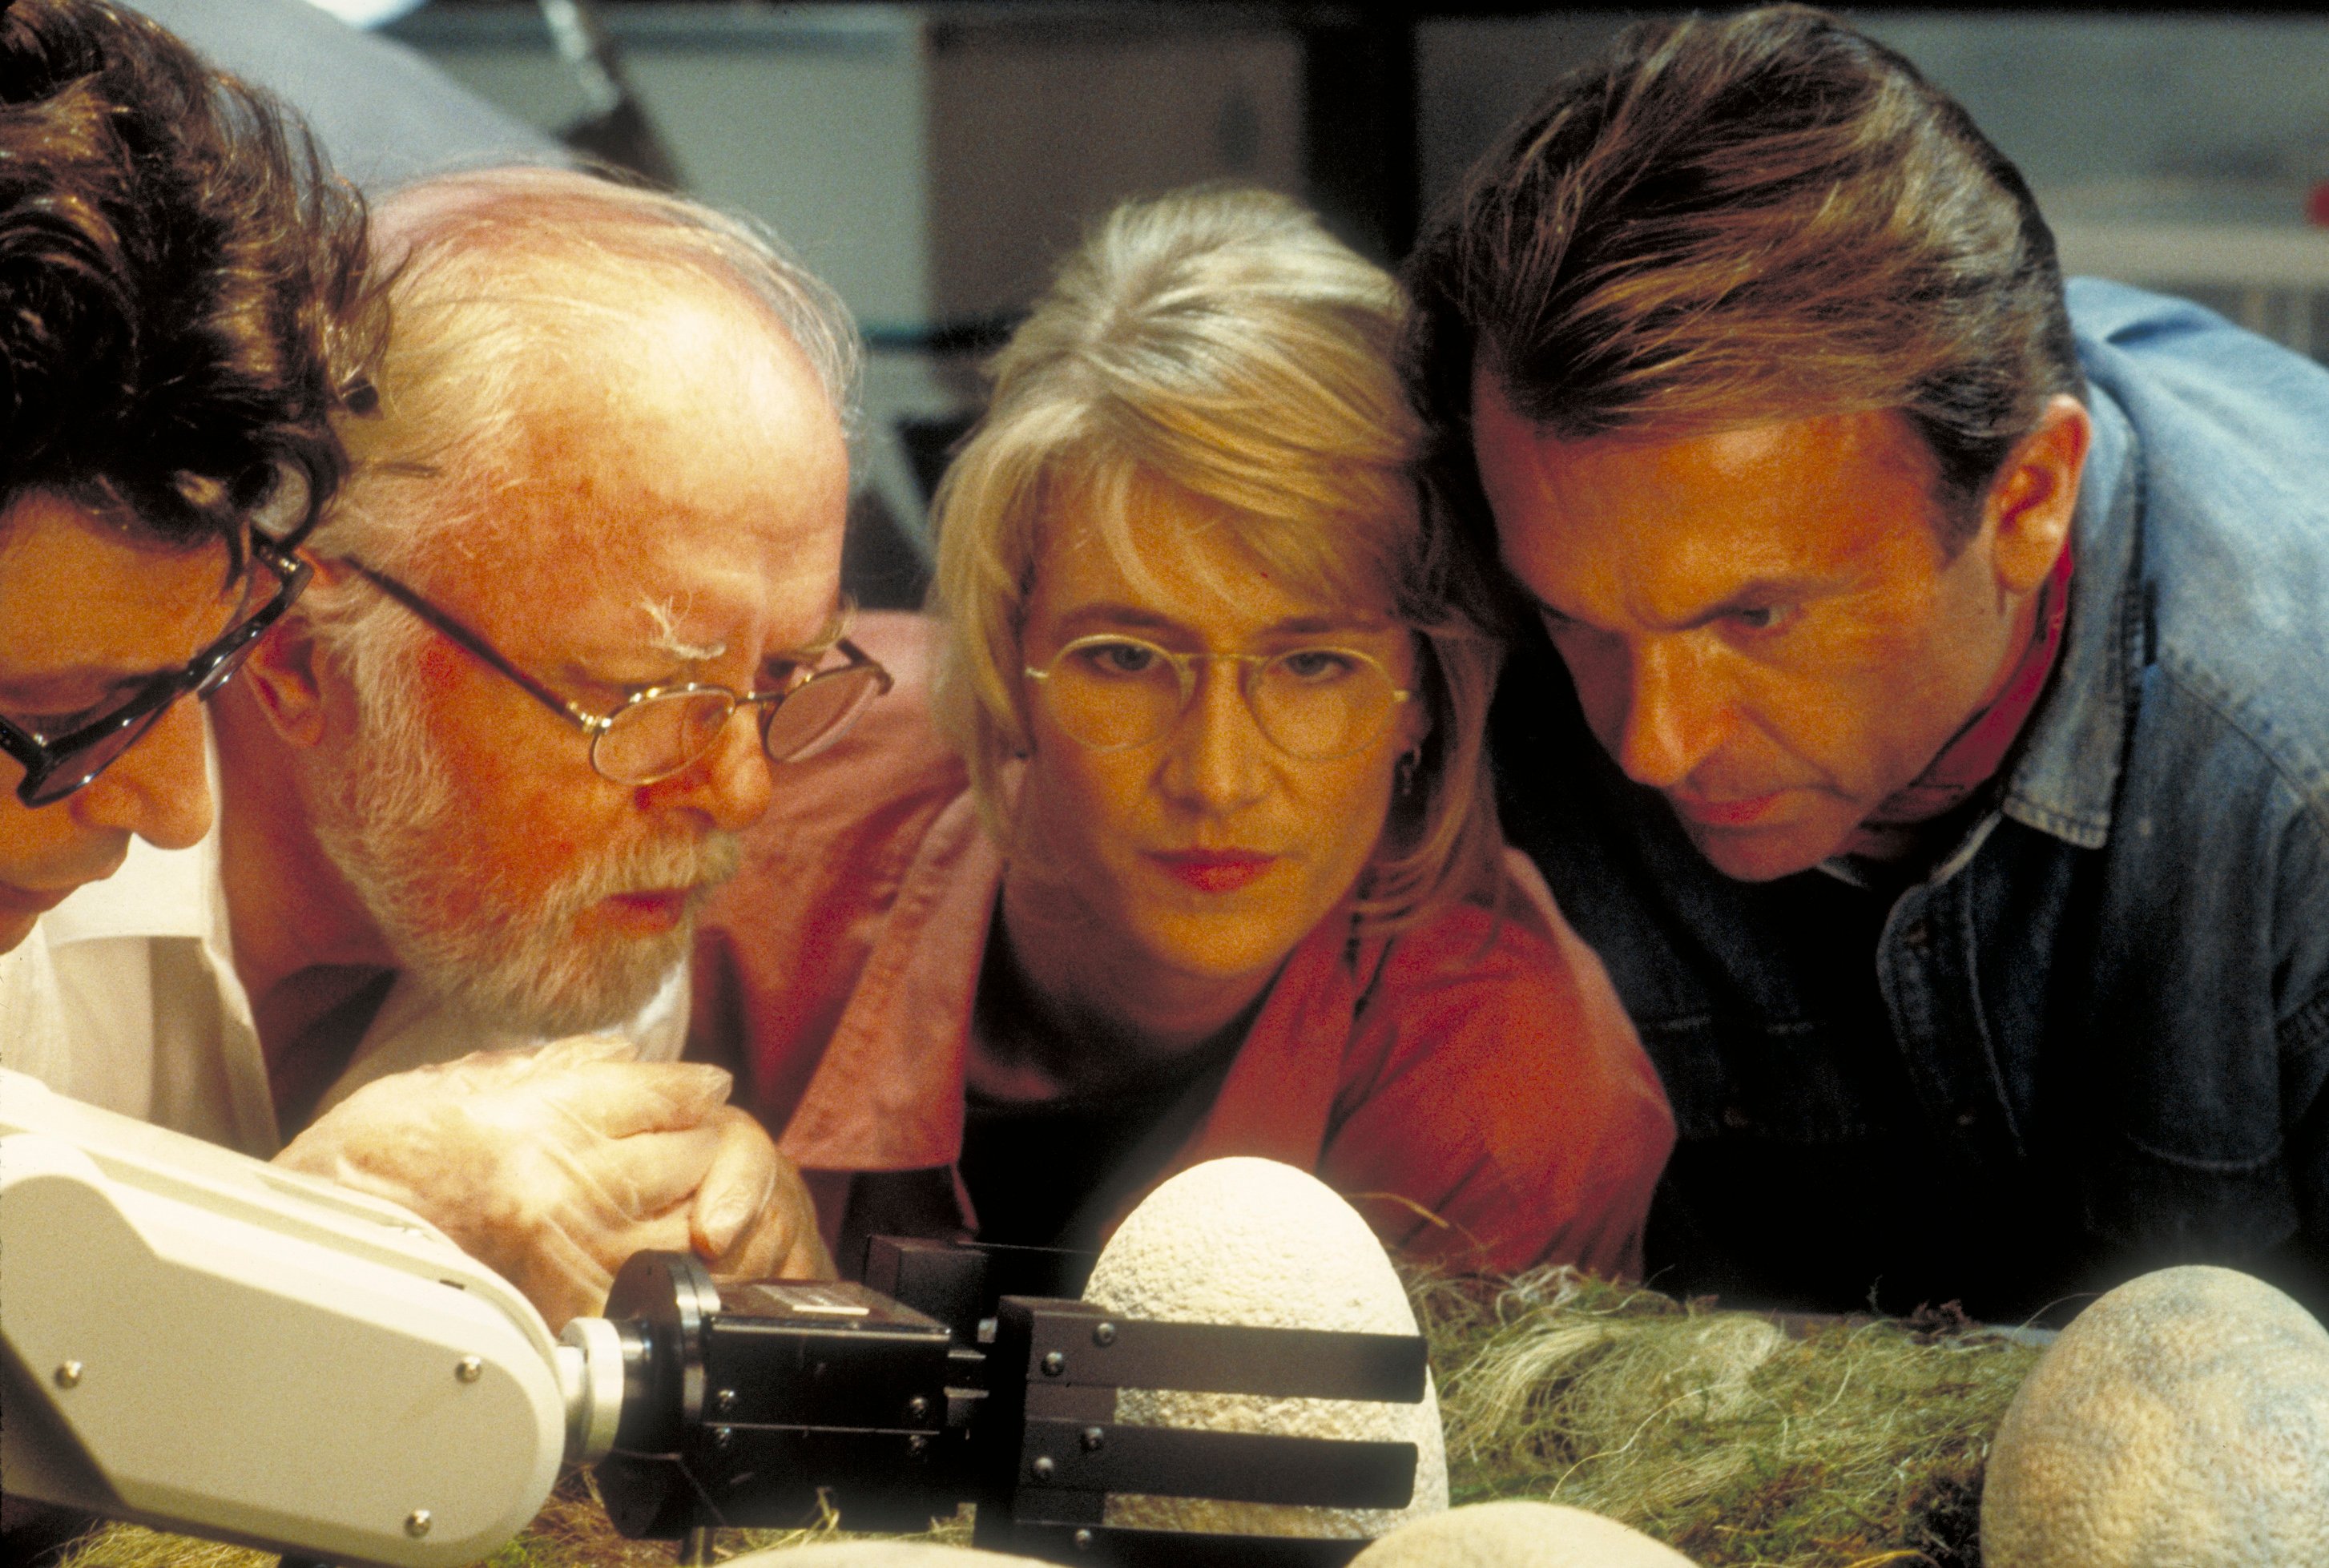 Jeff Goldblum, Richard Attenborough, Laura Dern, and Sam Neill star as the cast of Steven Spielberg's Jurassic Park